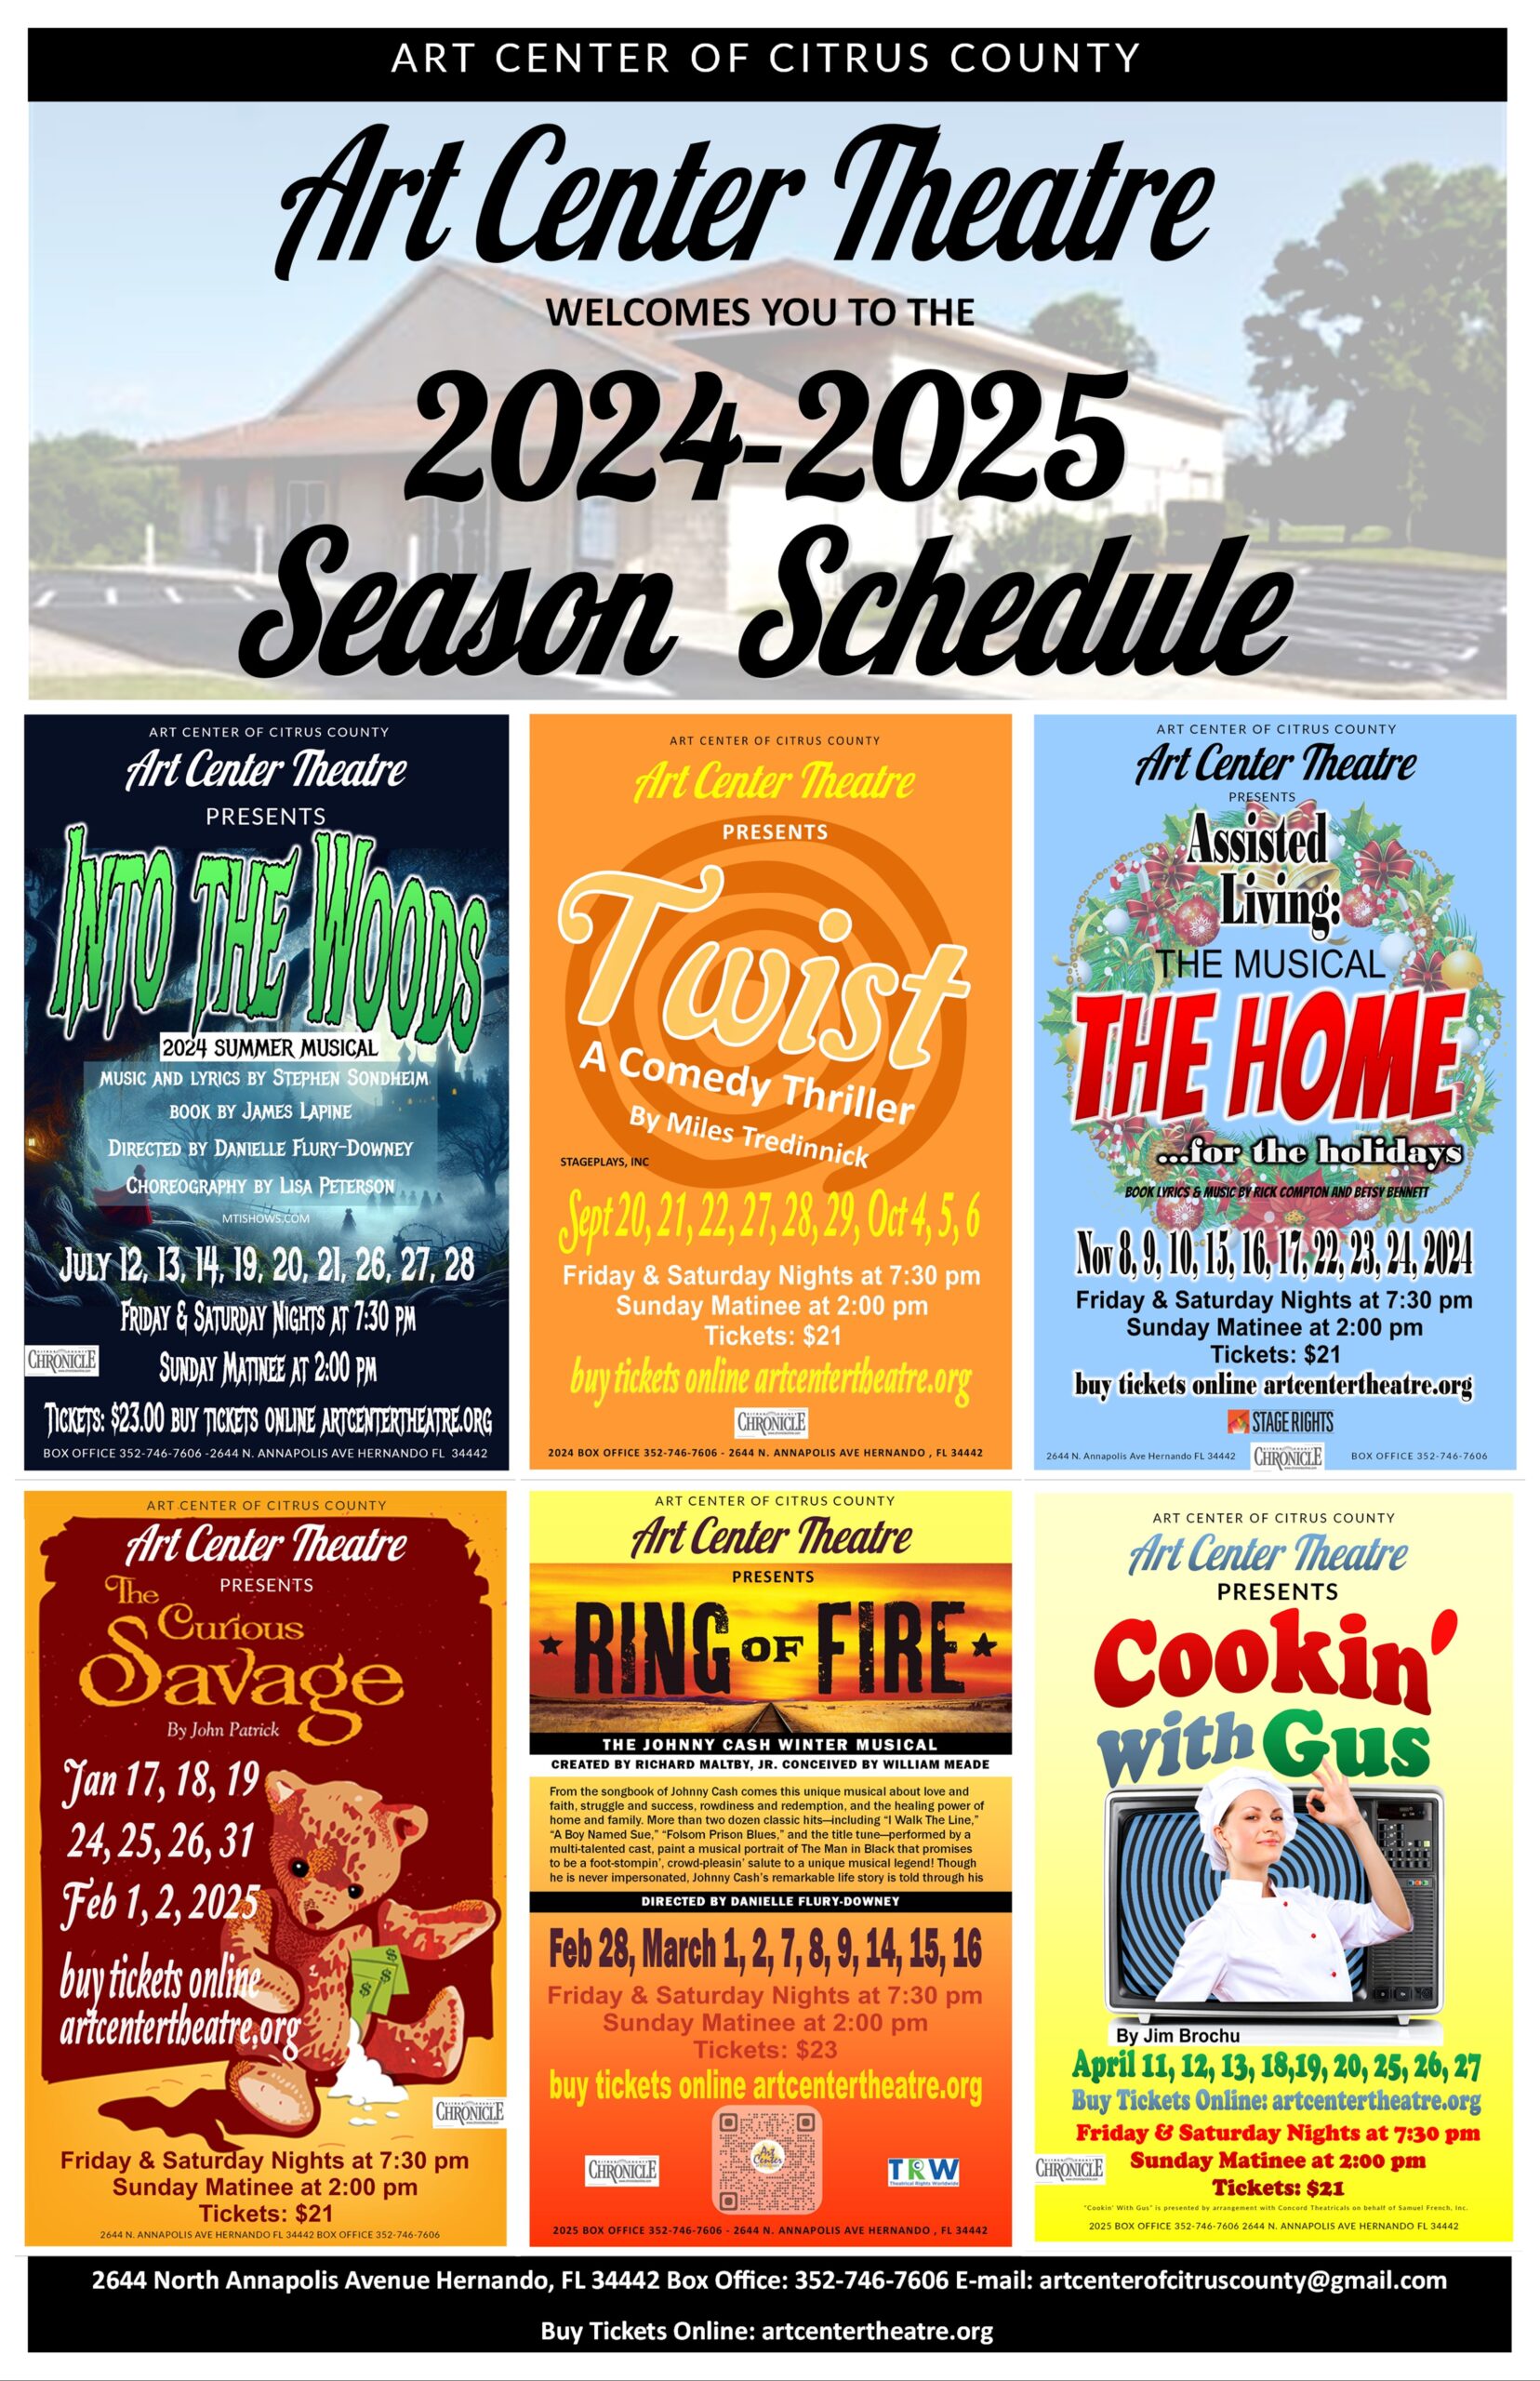 Announcing The: Art Center Theatre 2024-2025 Season Schedule